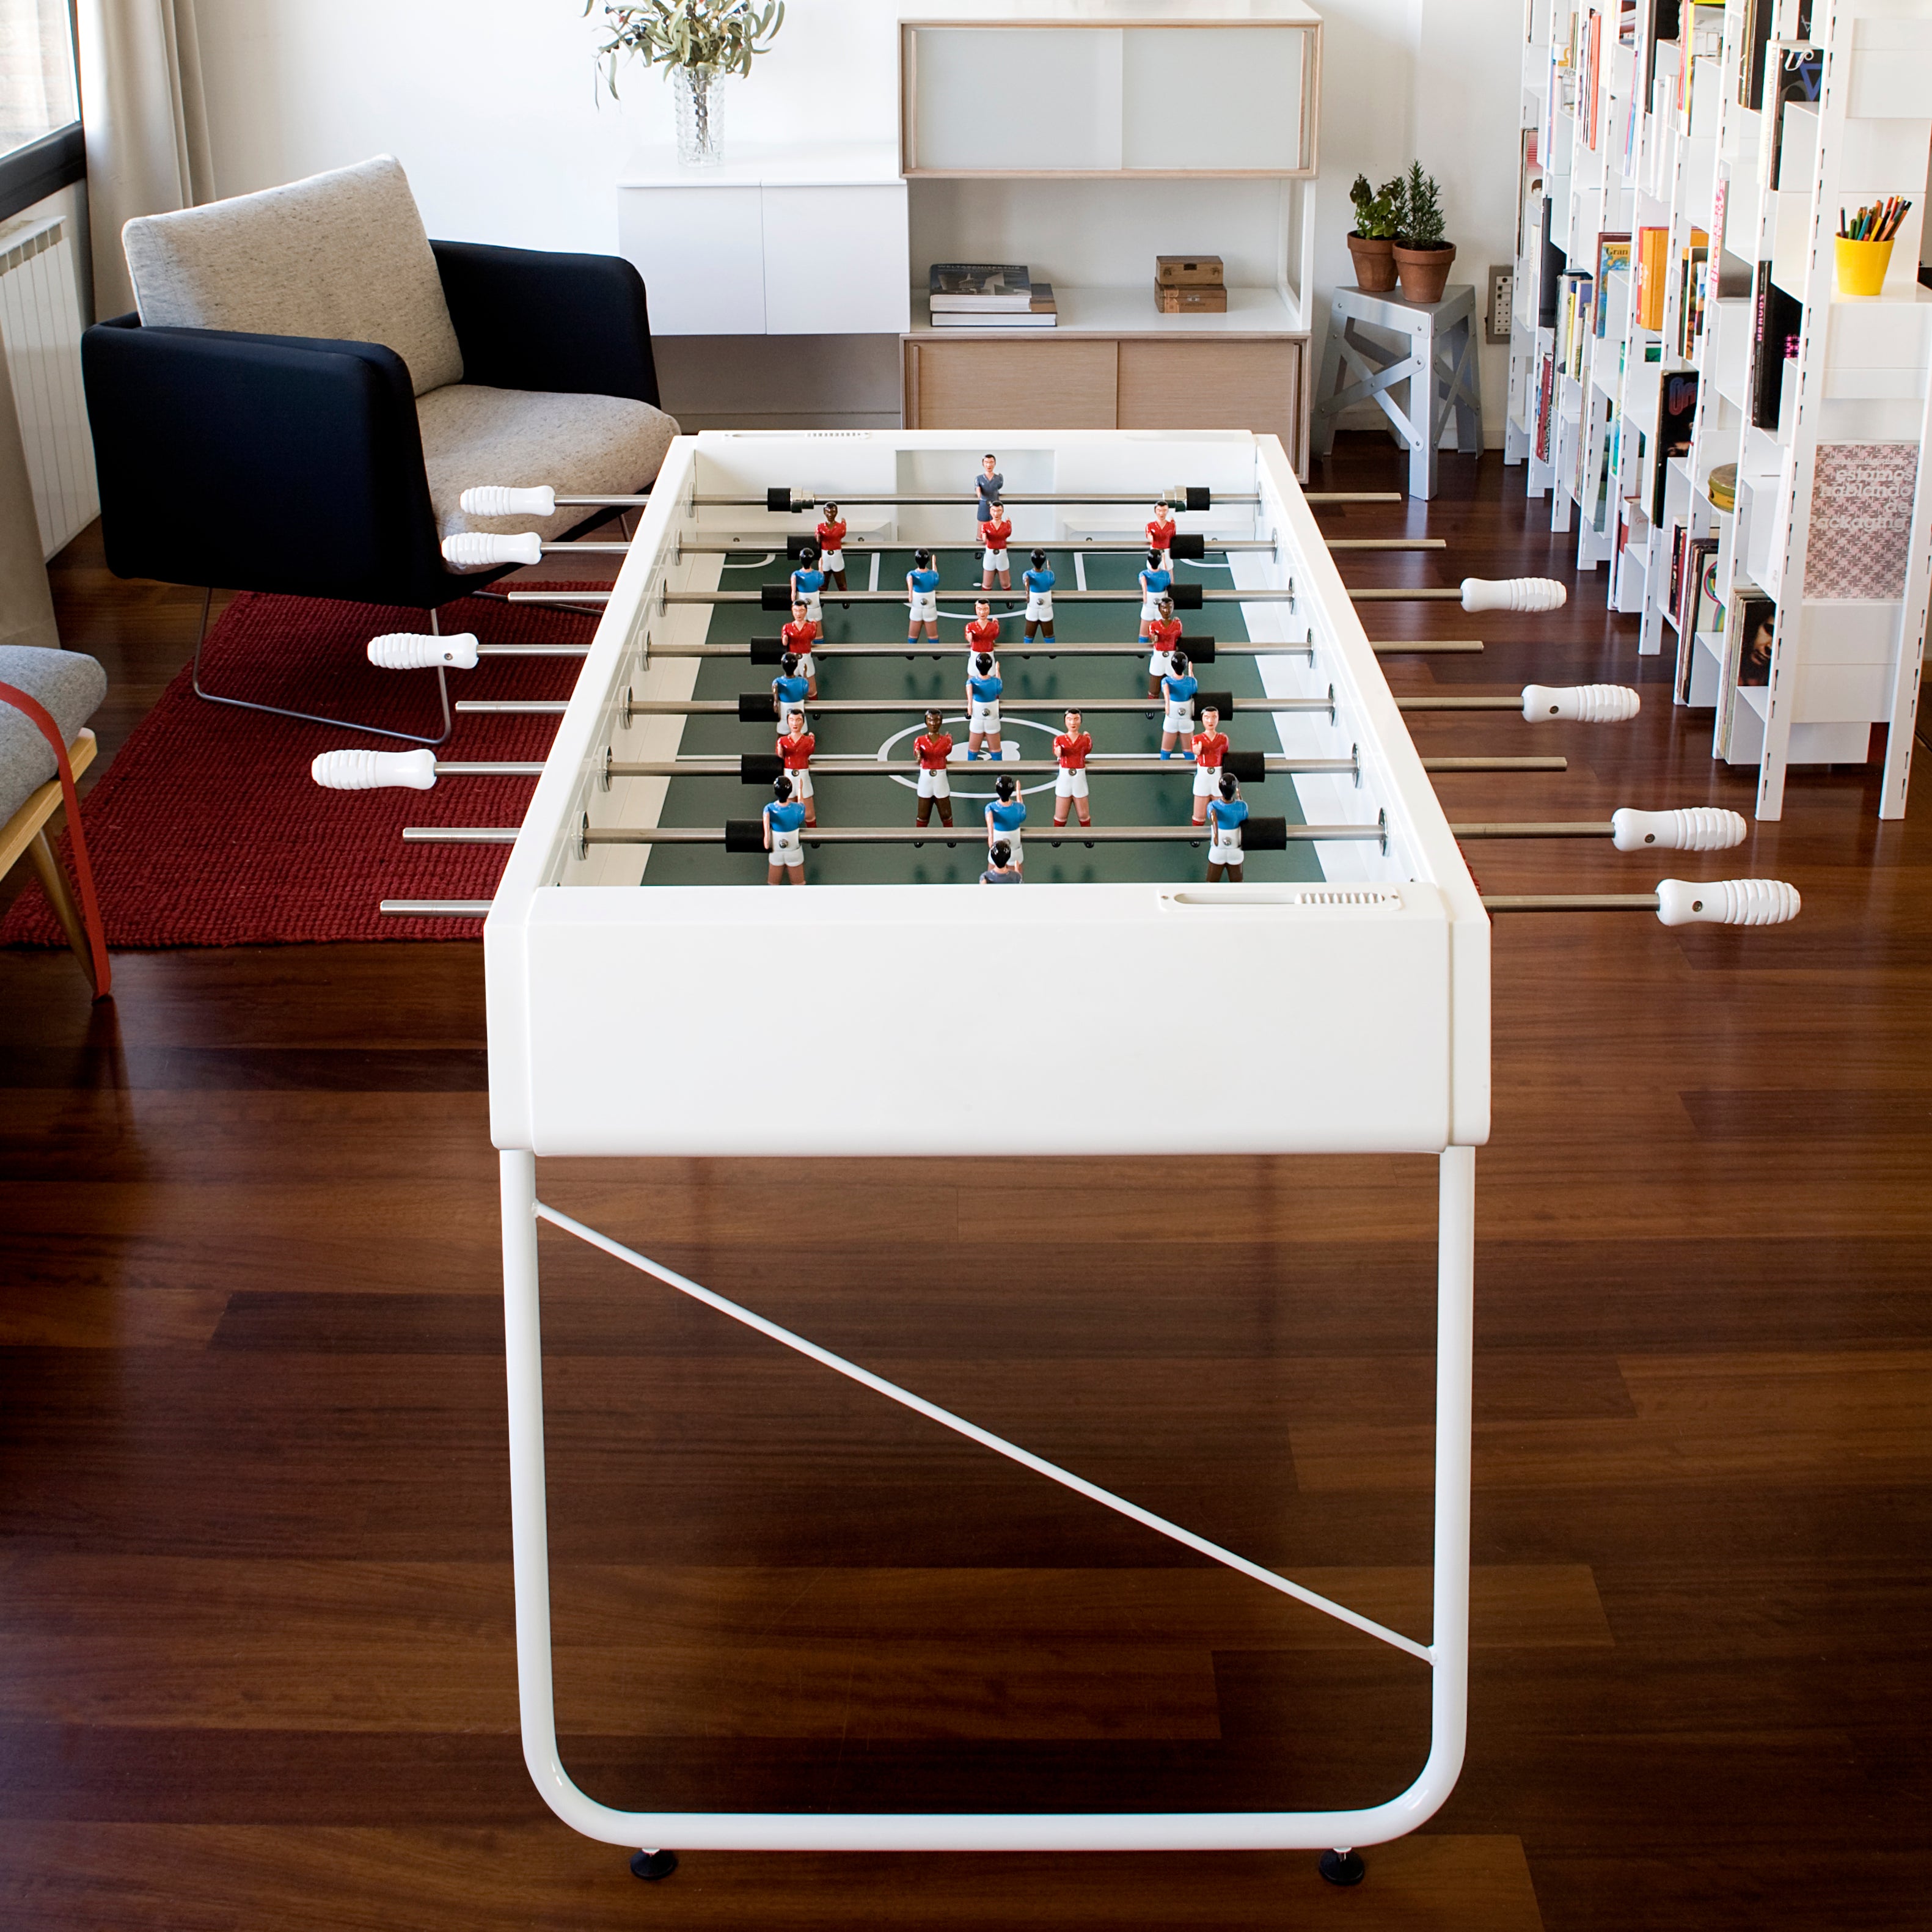 RS3 Football Table: Indoor/Outdoor